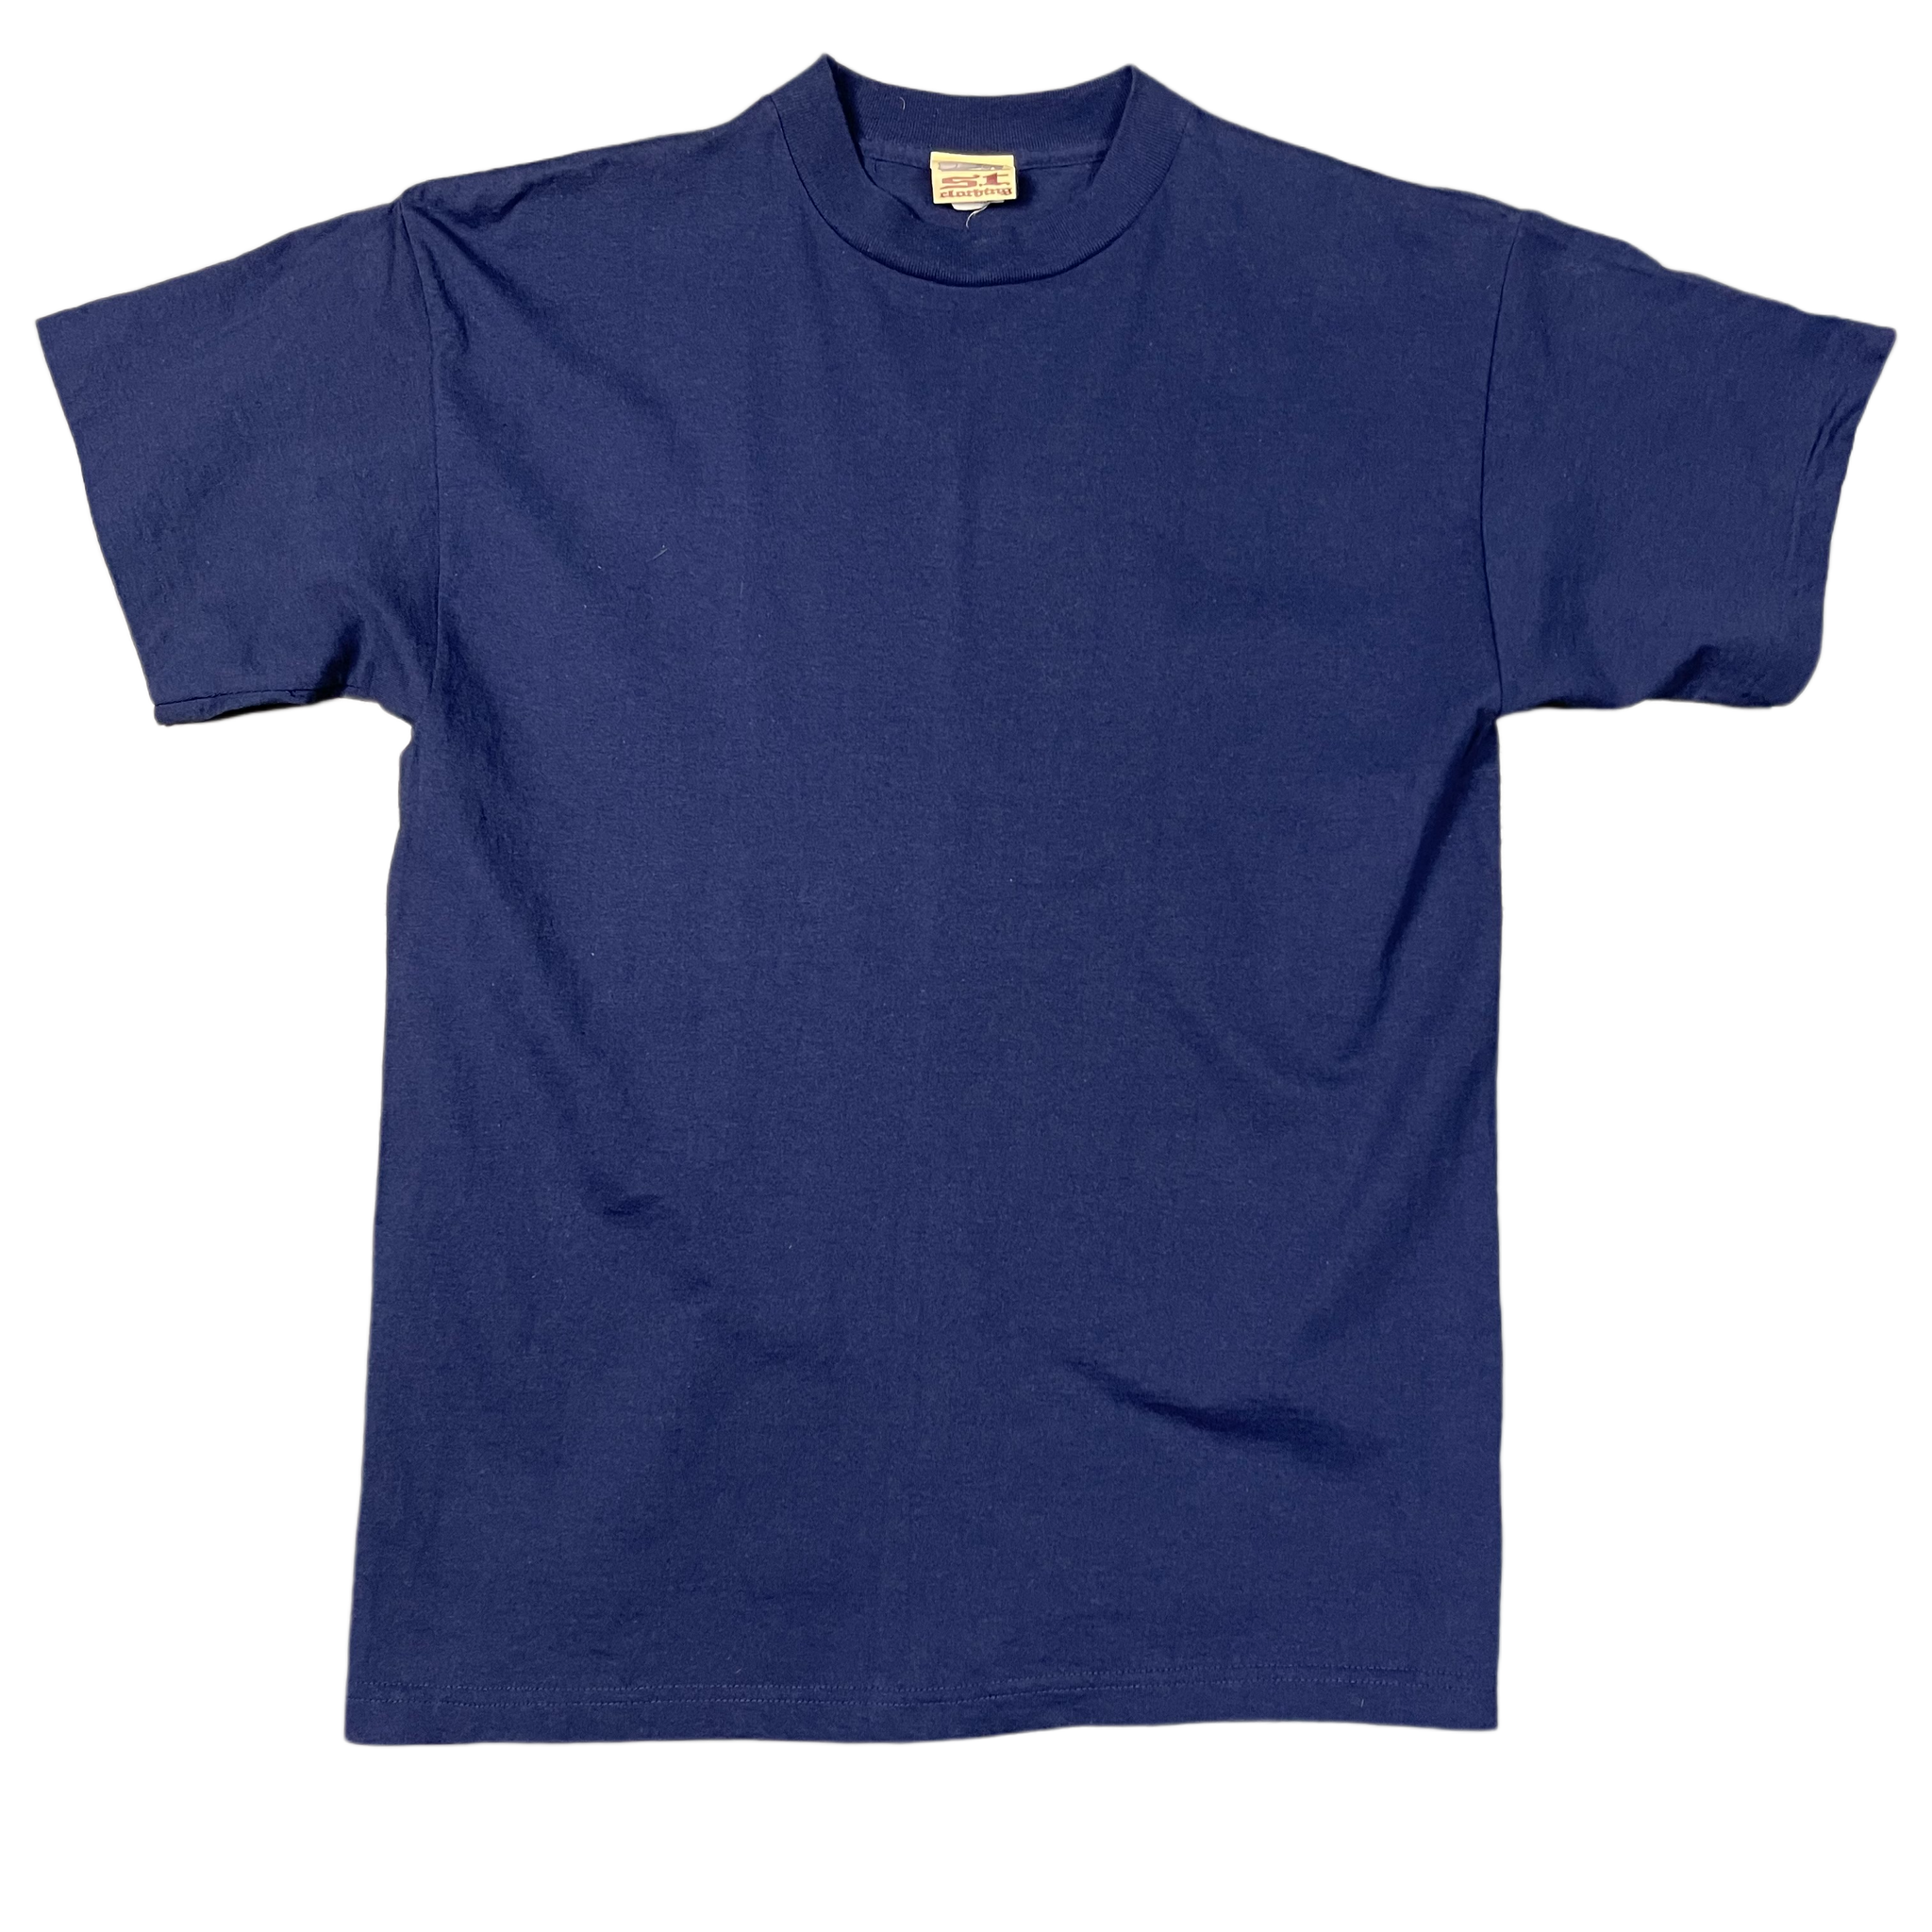 Vintage Navy s.t. clothing T-Shirt 90s - XL